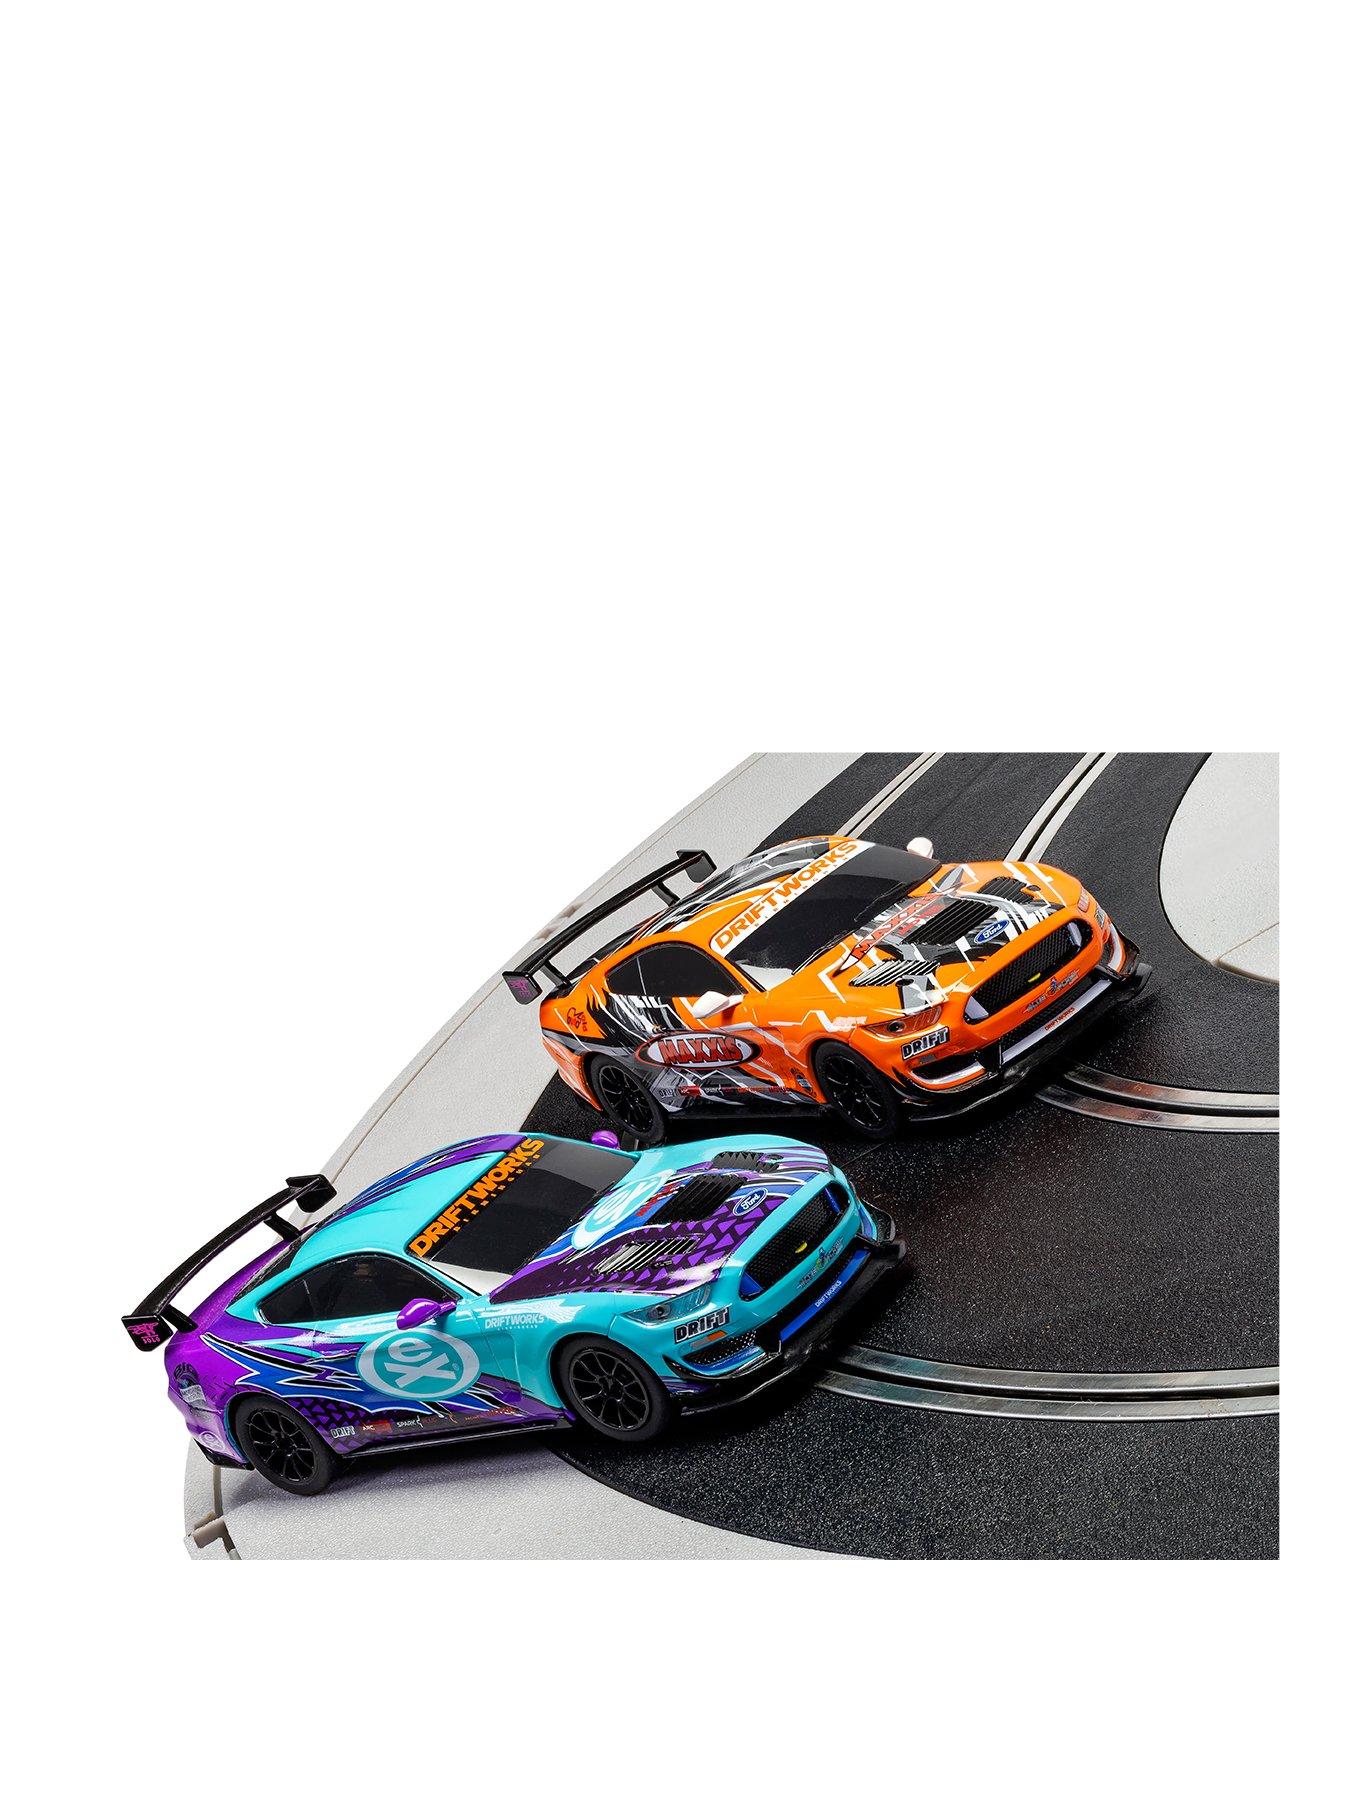 Circuit de voitures : Drift 360 Race